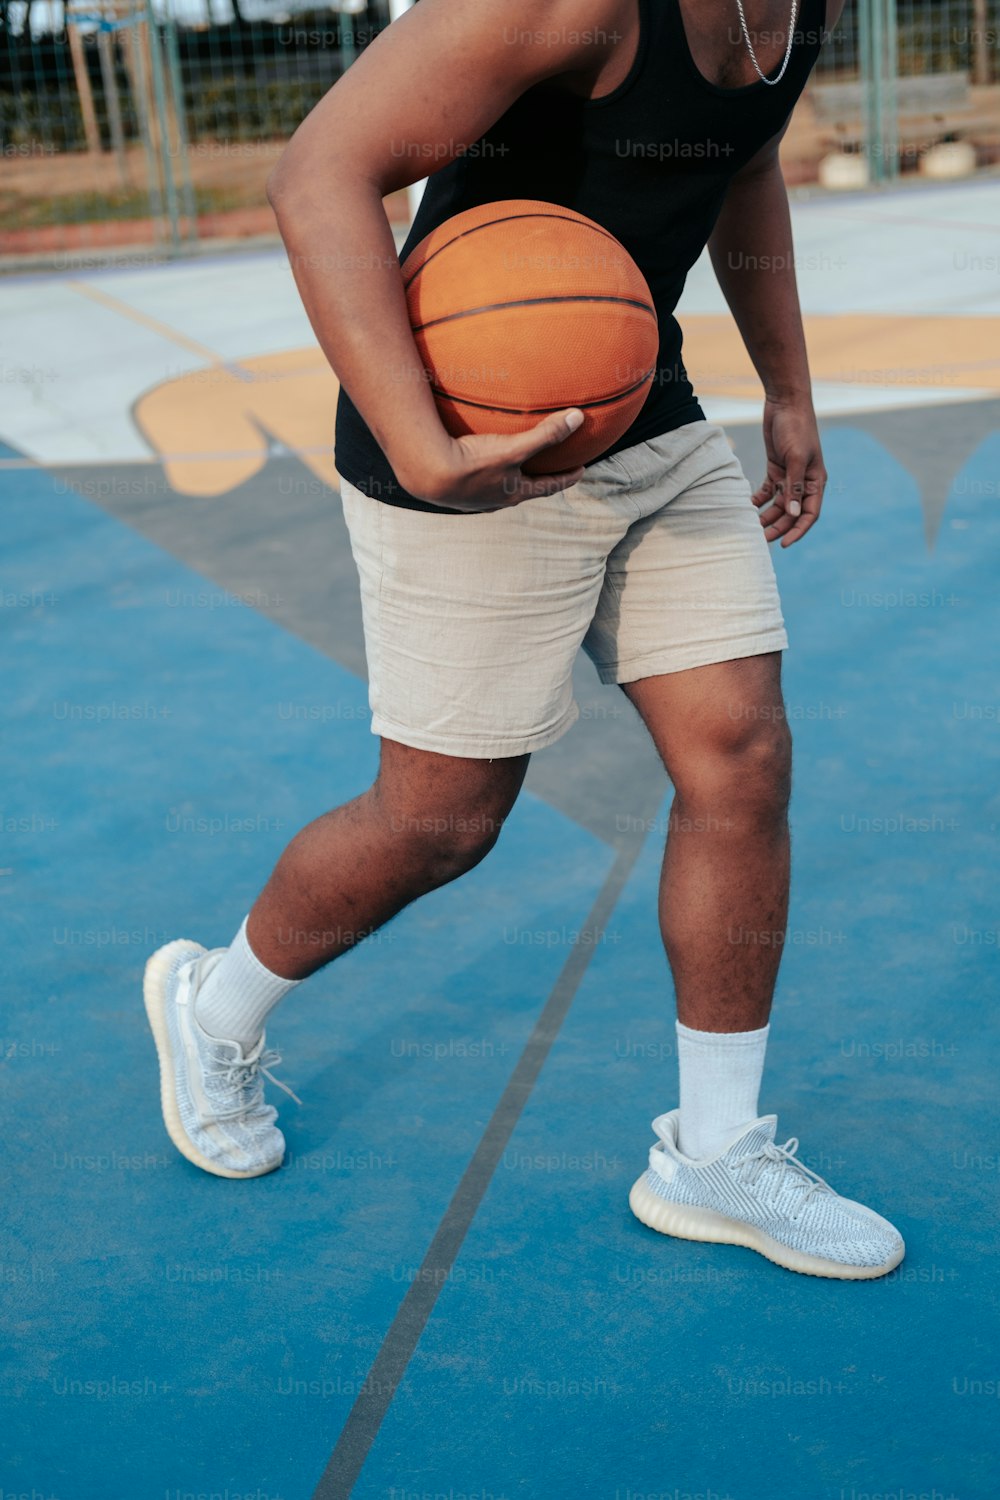 a man holding a basketball on a court